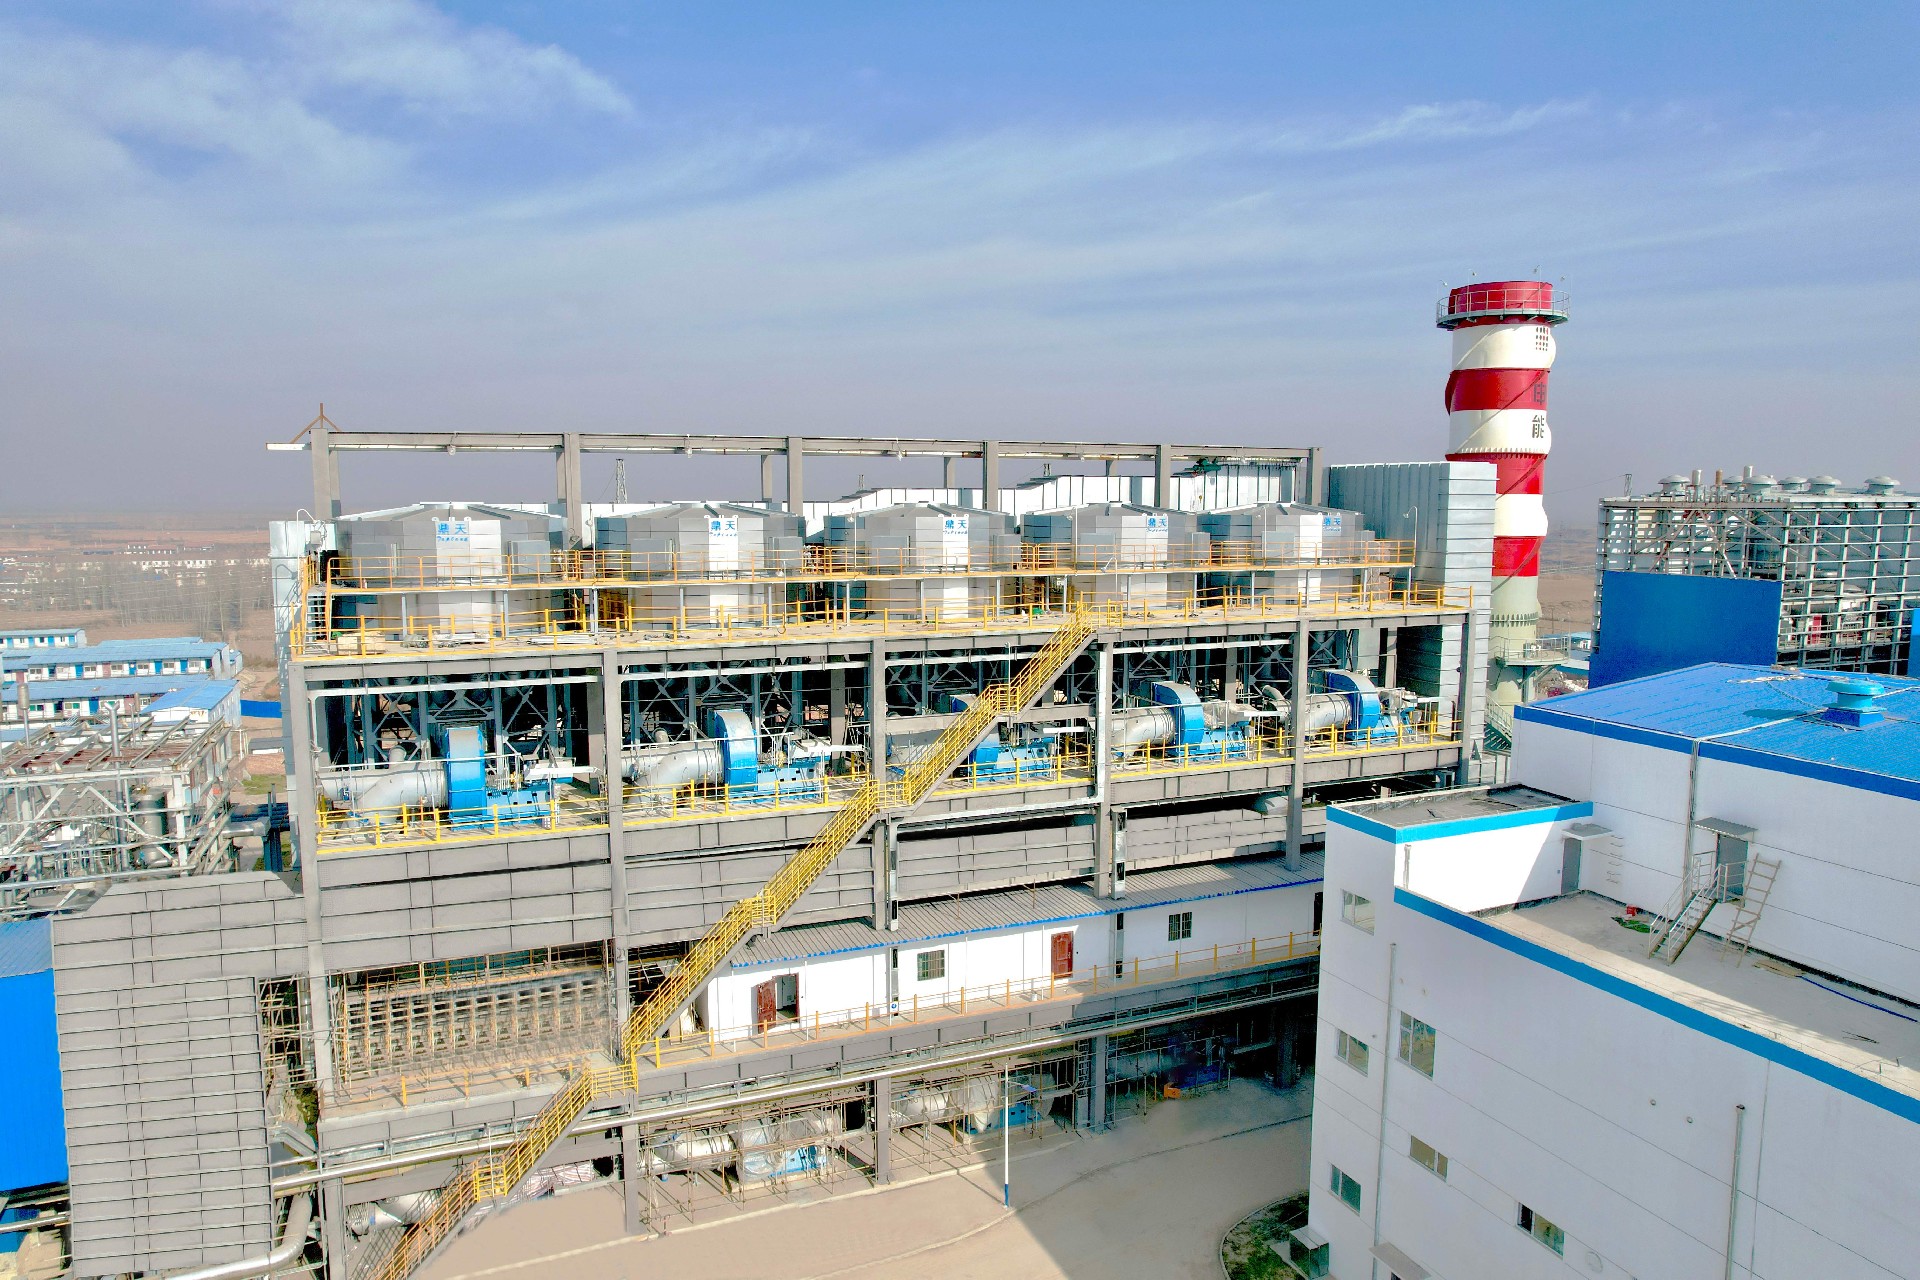 Waste gas oxidation power generation of Luan Gucheng Coal Mine